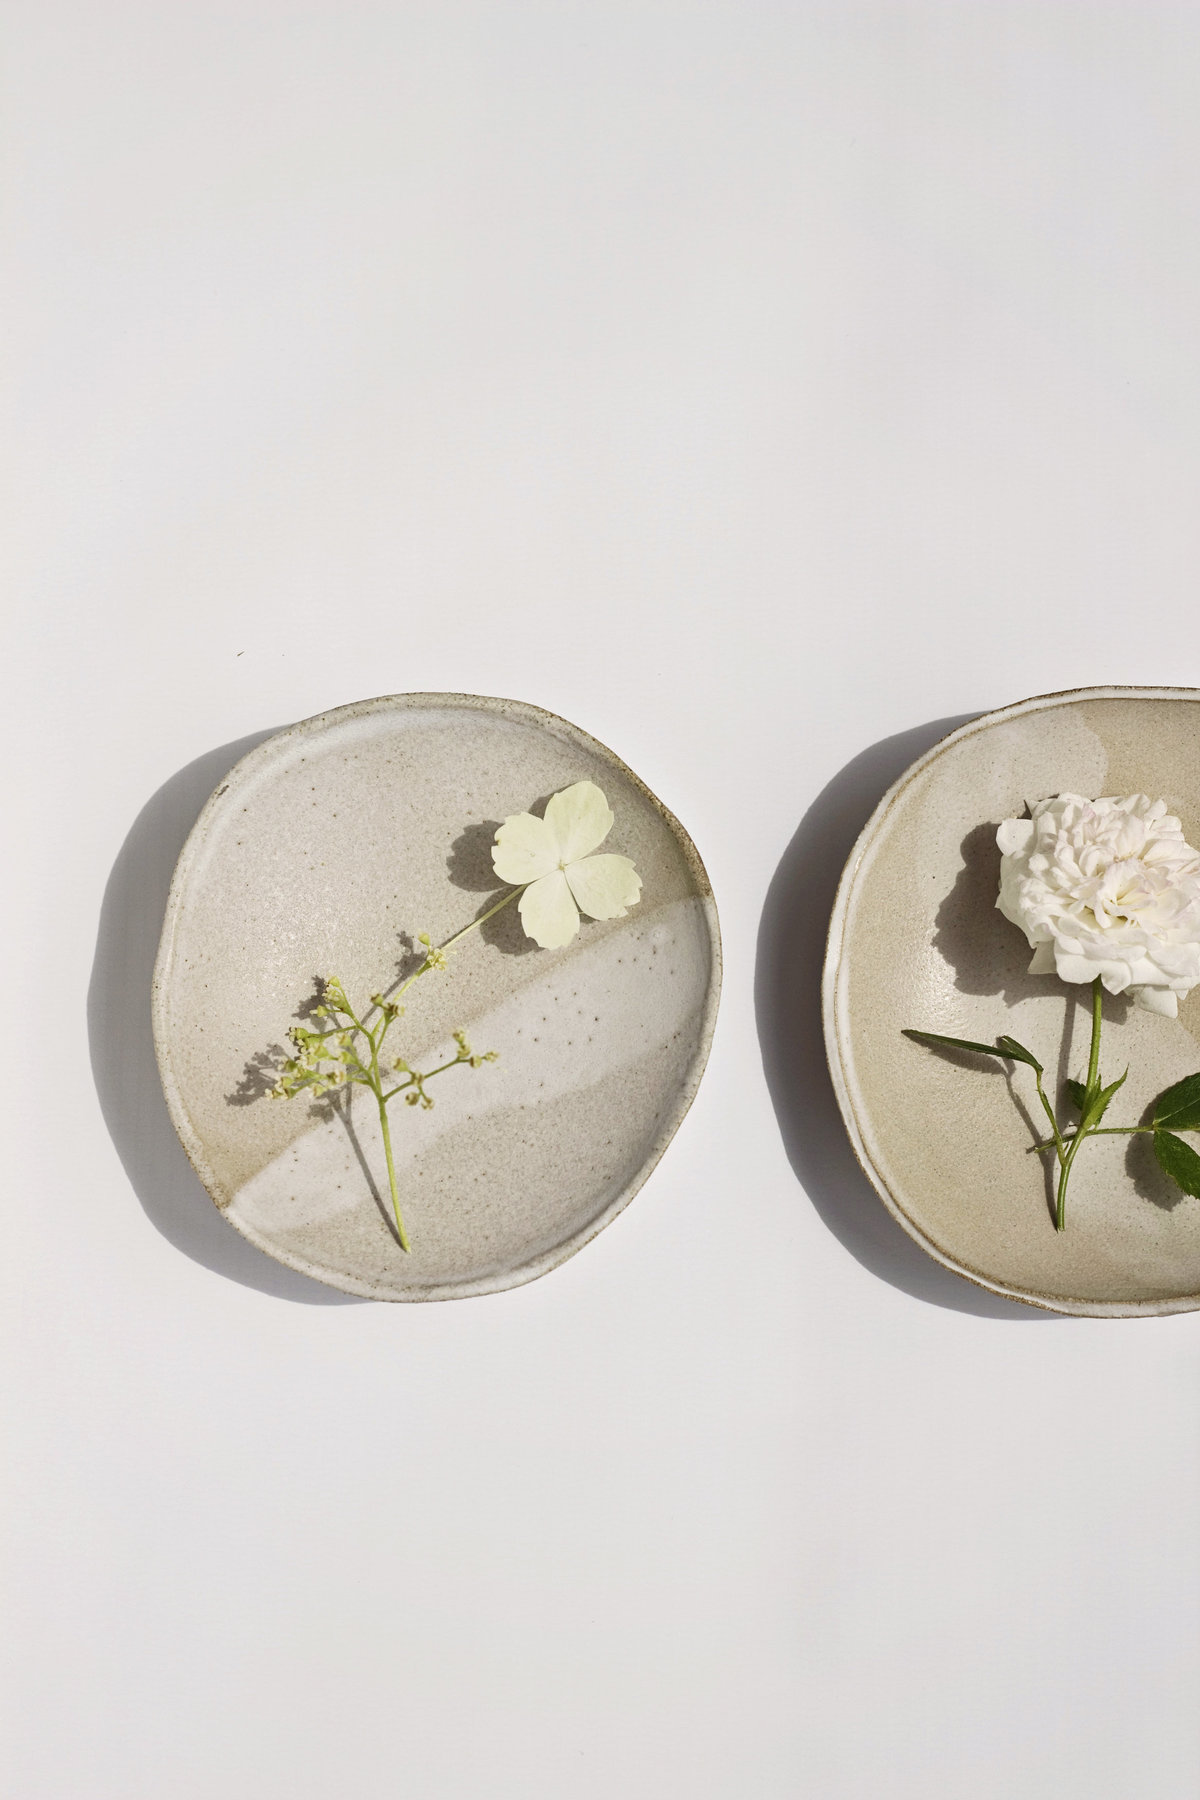 Yasha-Butler-Ceramics-Tableware-Plate-White-10-3500px